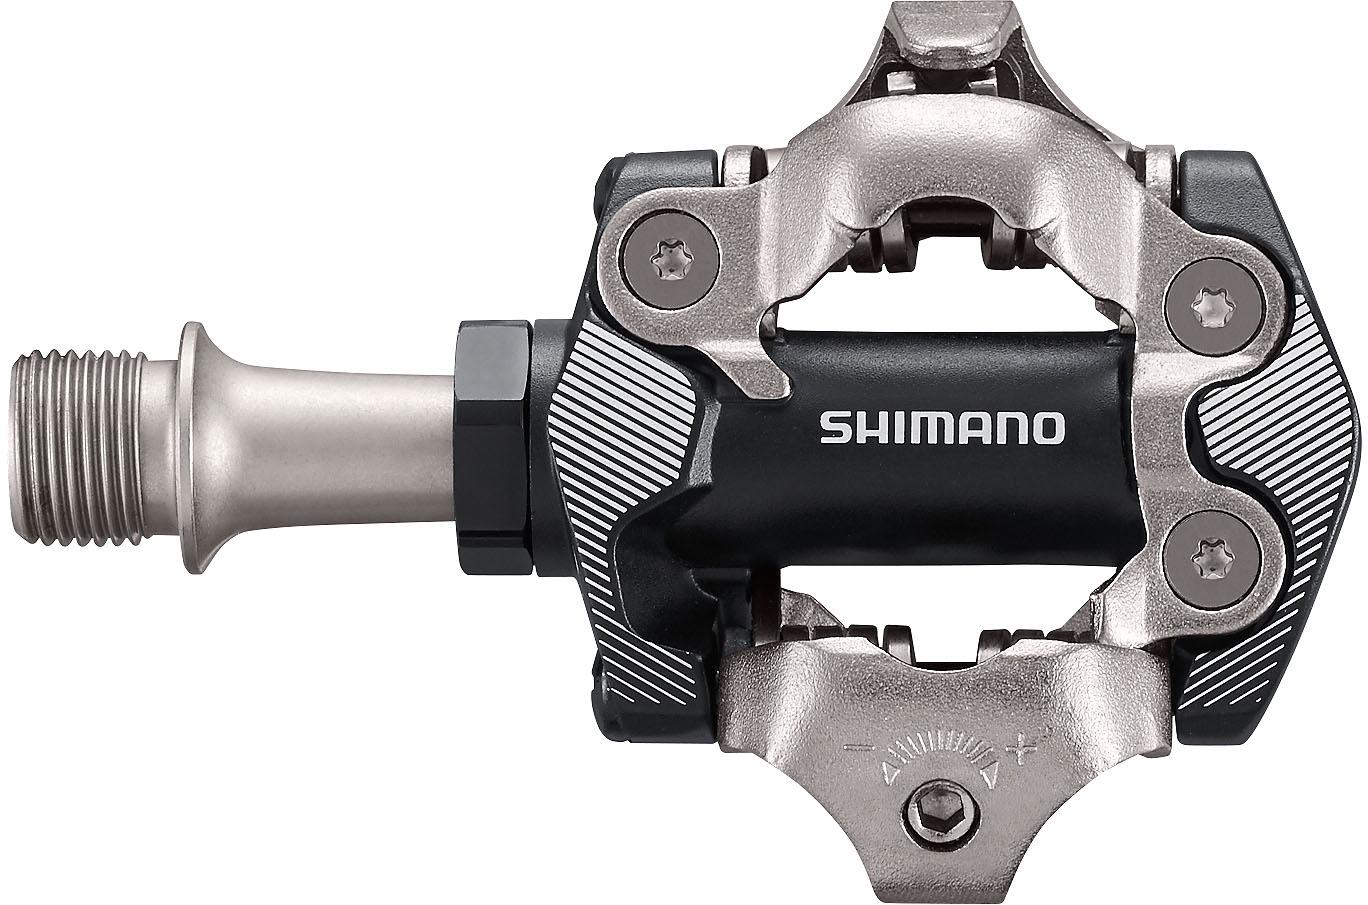 Shimano M8100 Spd Mountain Bike Pedals - Black